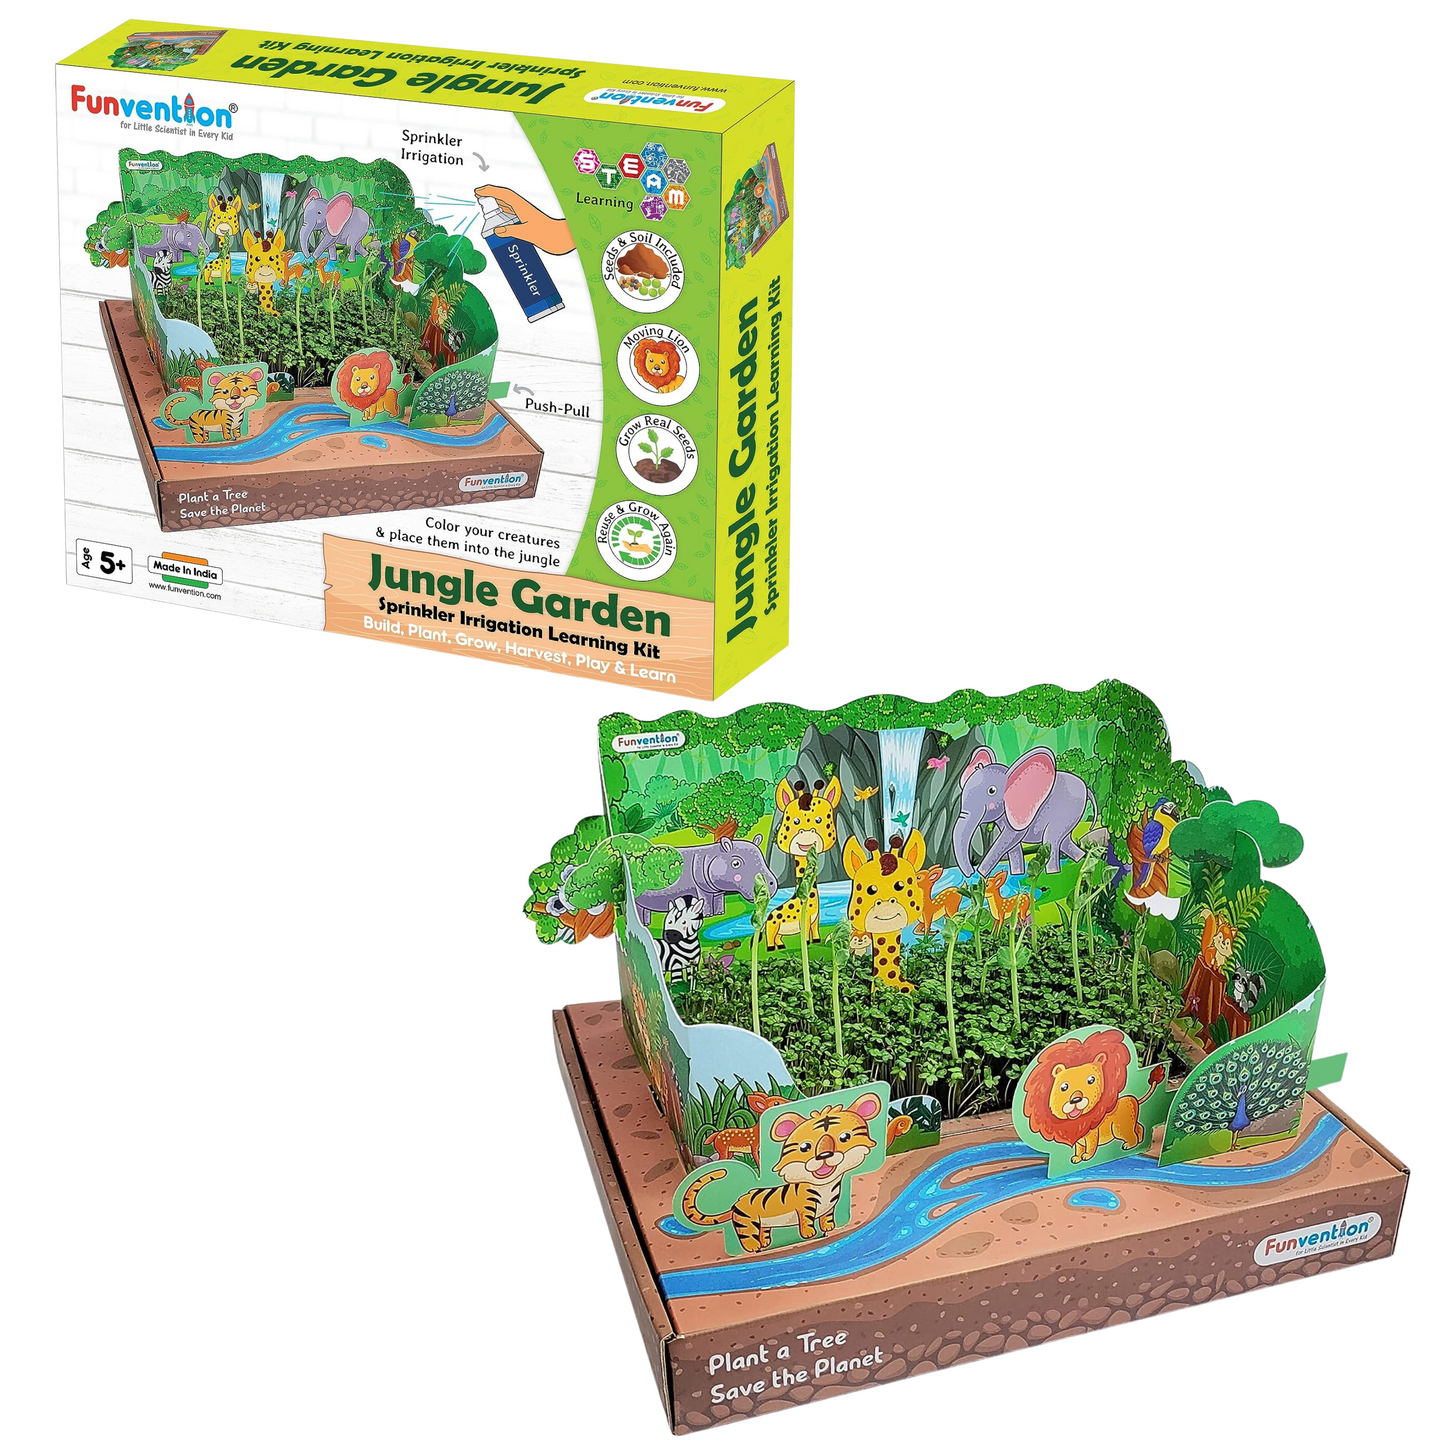 Garden sprinkler irrigation learning kit for kids â